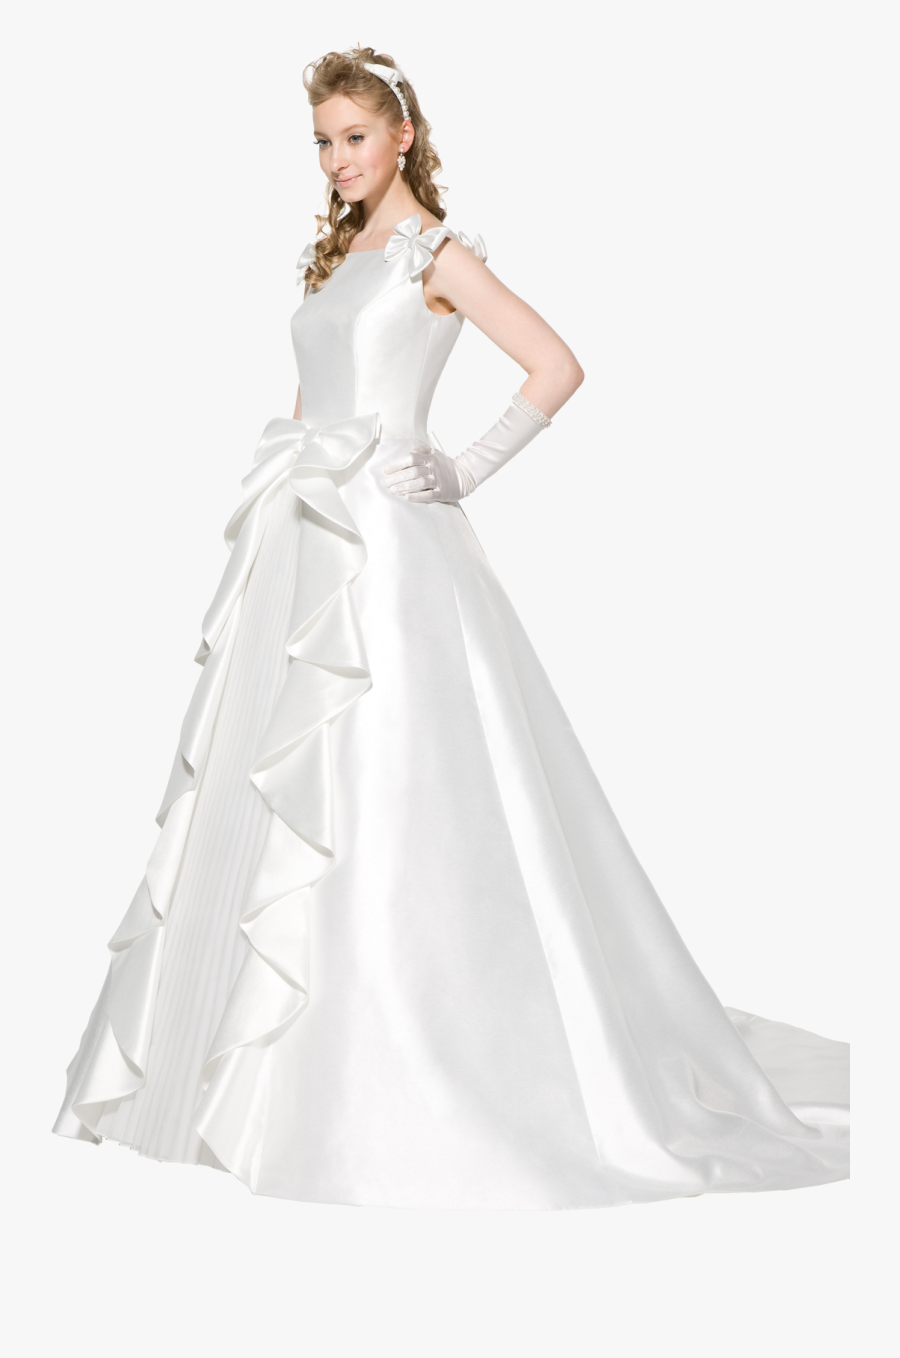 Wedding Dress Png - Girl In Wedding Dress Png, Transparent Clipart